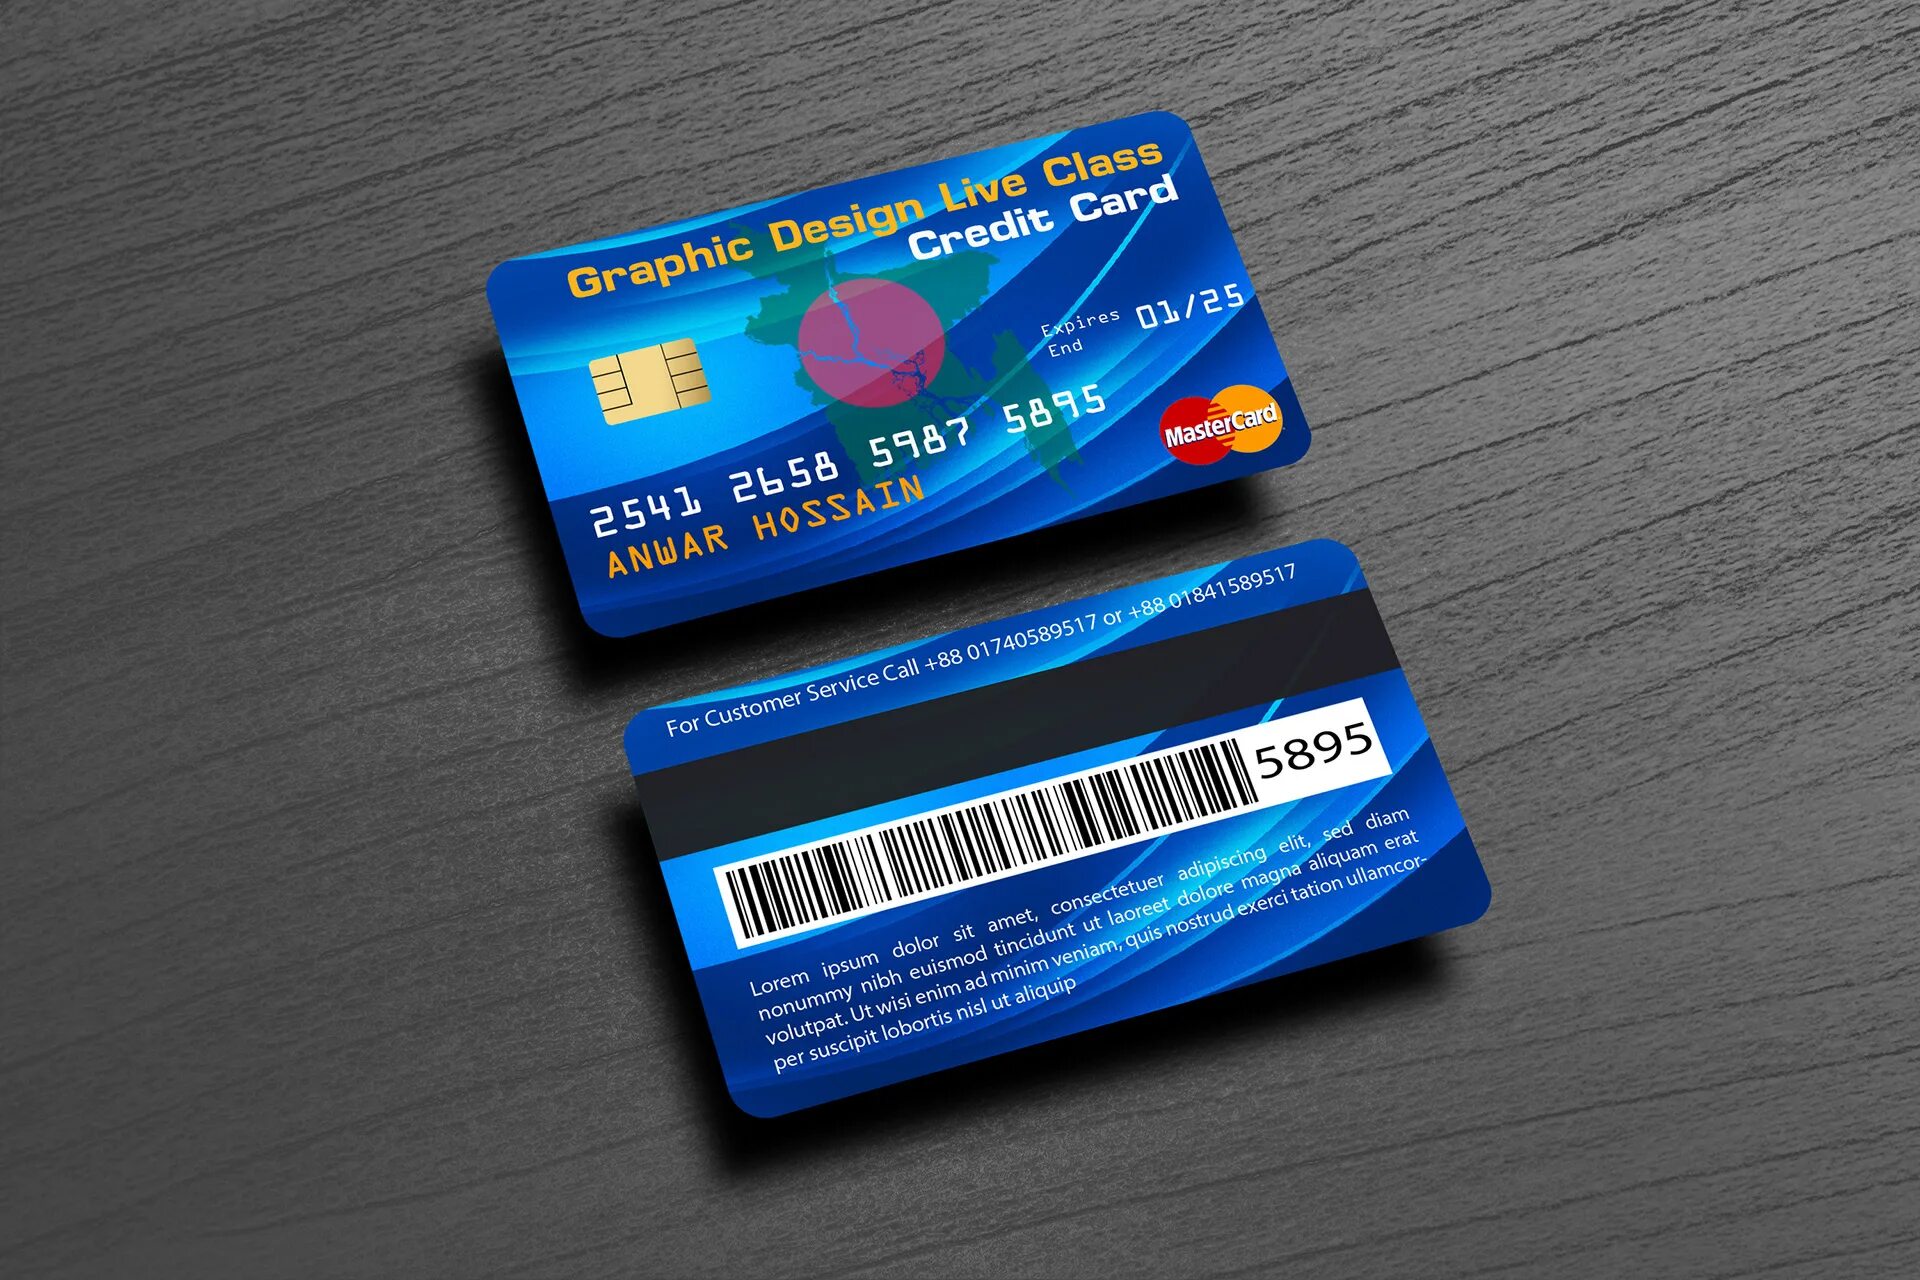 Карта мастер счета. ATM Card. ATM карта что это. ATM Card MASTERCARD. Master Card Design.